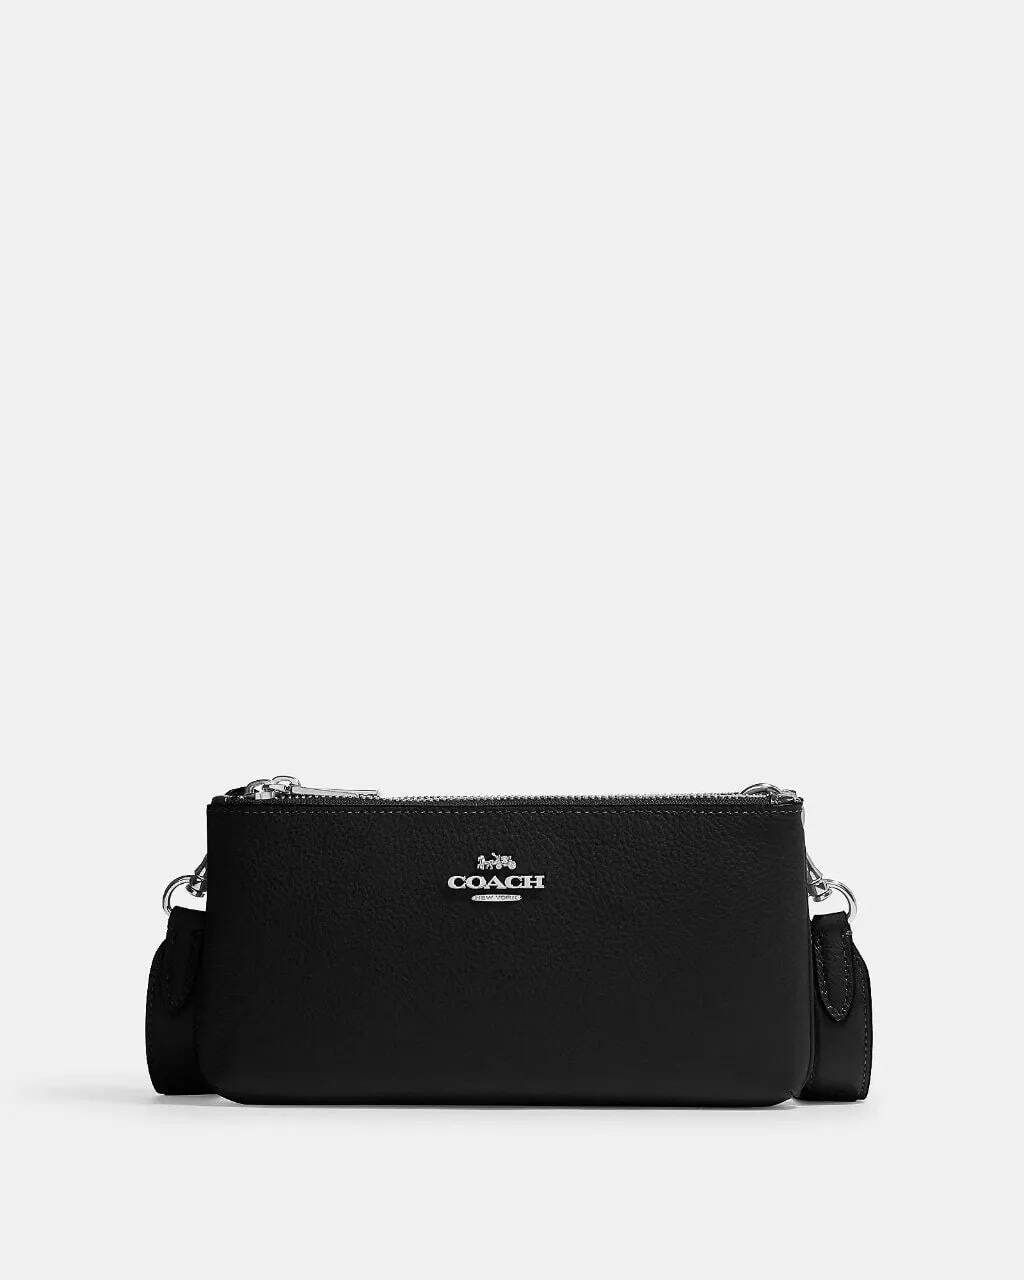 handbagbranded.com getlush outlet personalshopper usa malaysia ready stock COACH DOUBLE ZIP CROSSBODY